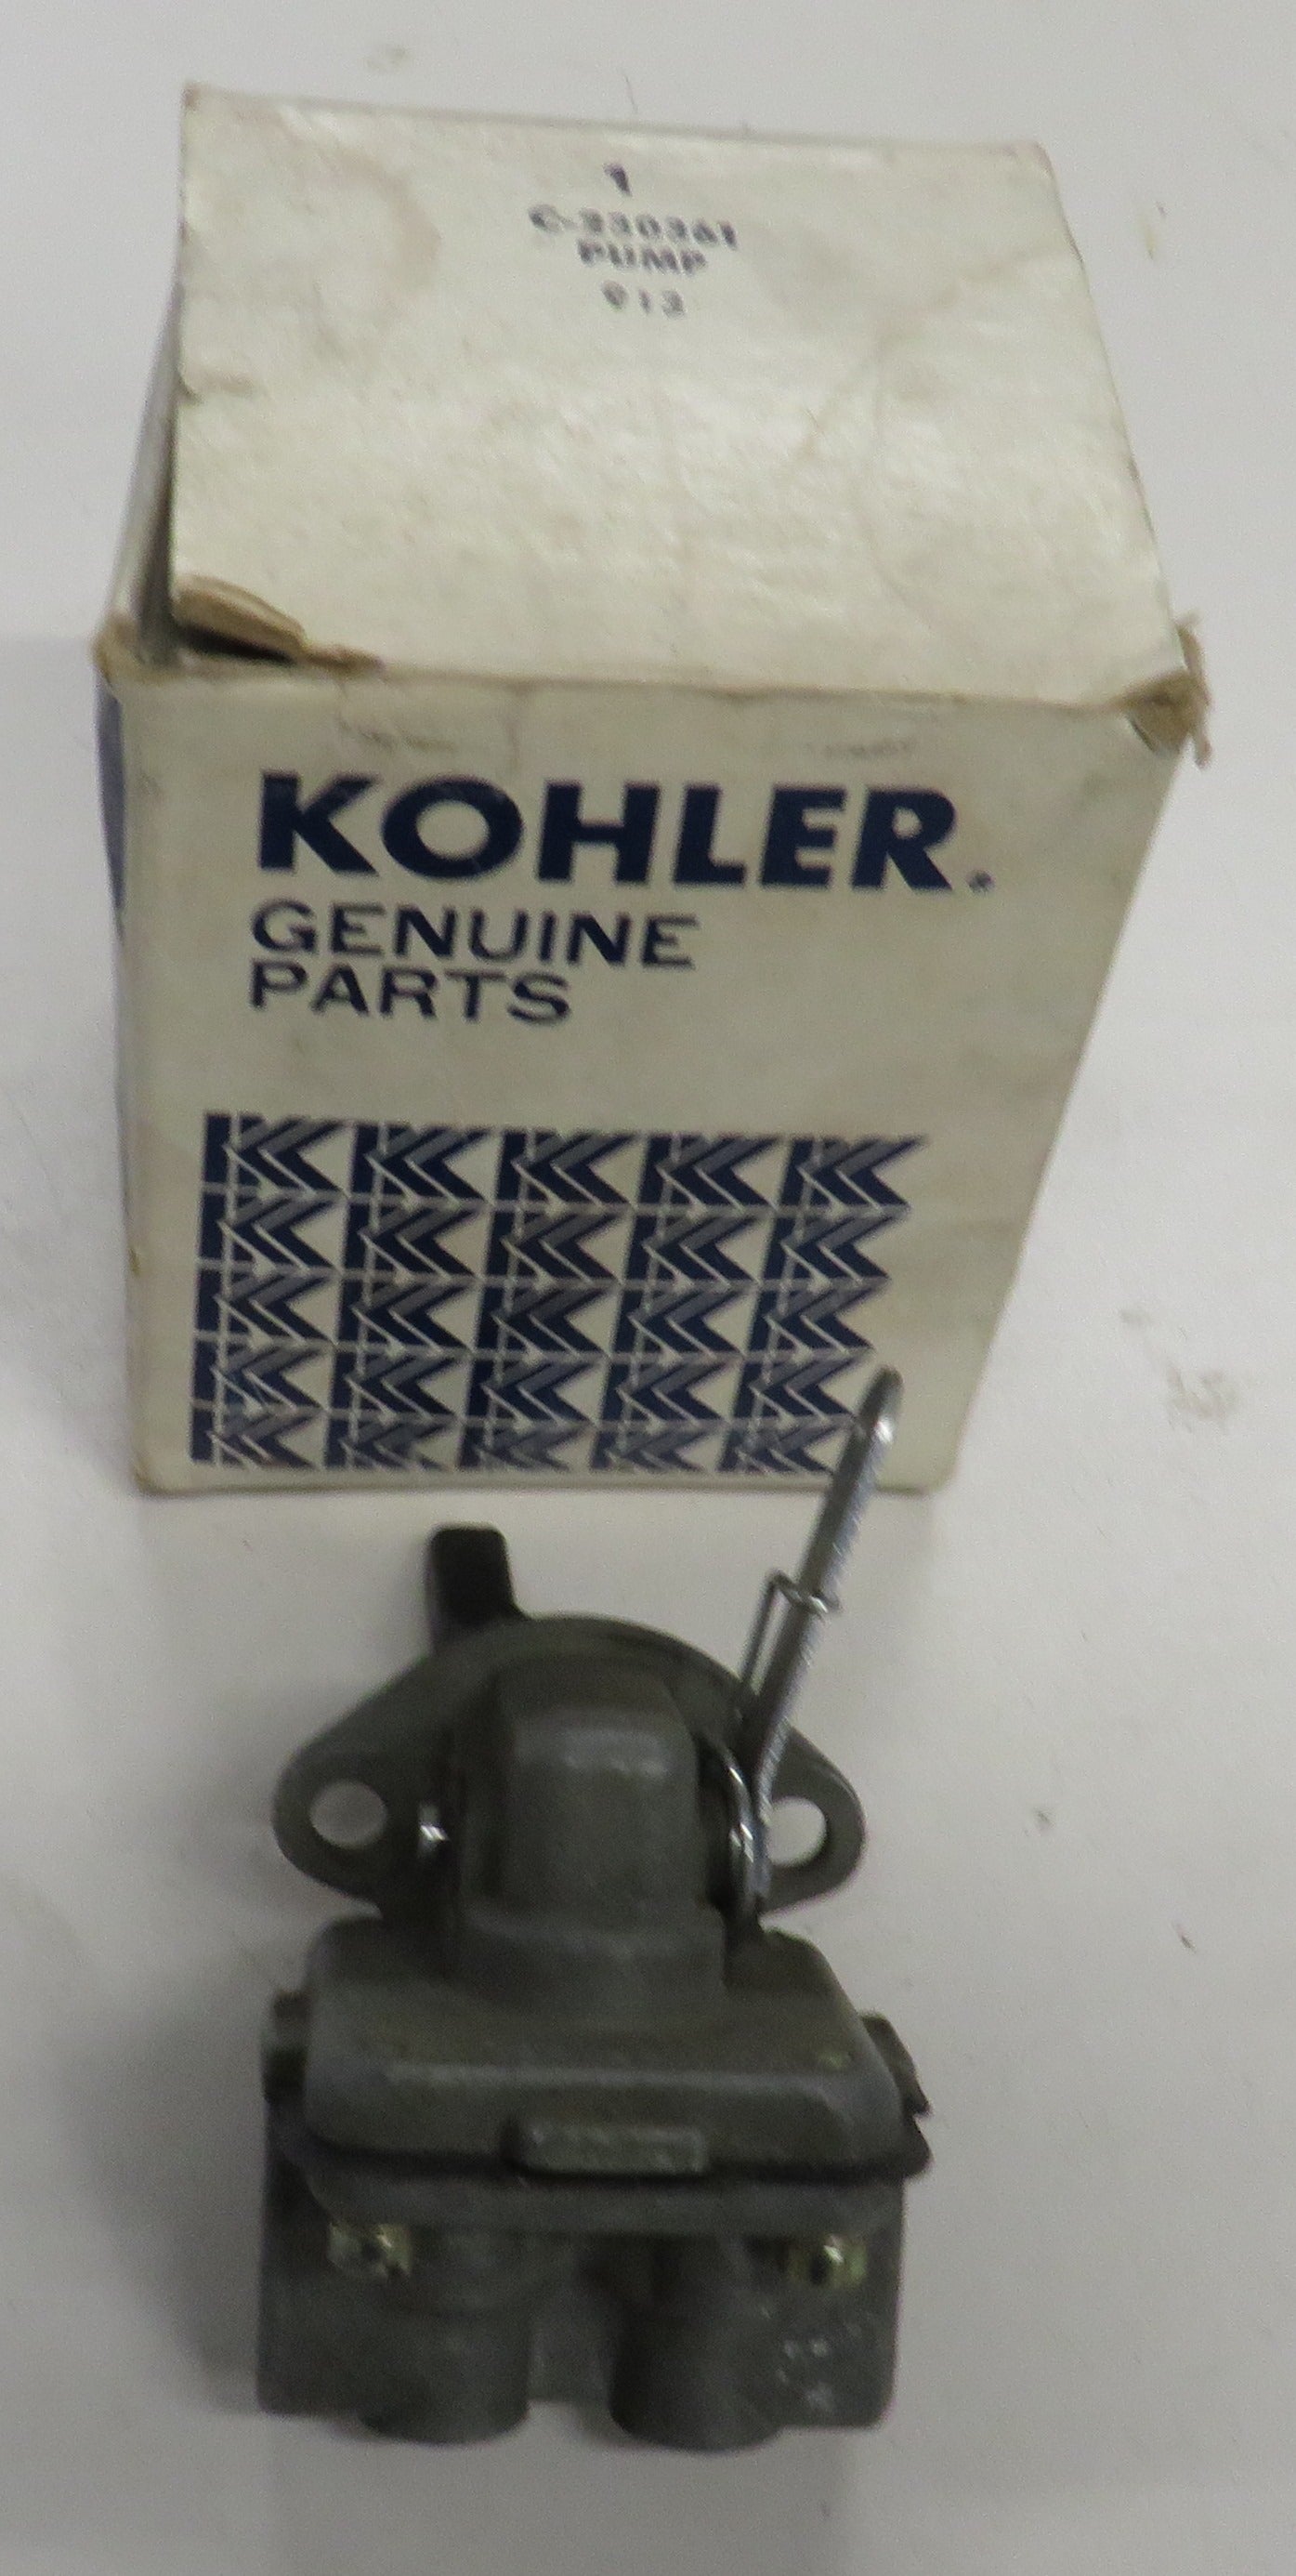 Kohler C-230361 Fuel Pump Obsolete Superseded by 41 559 05-S, A231796, 4155901-S, Fits K Series K141, K181 & Magnum M8 Engines 